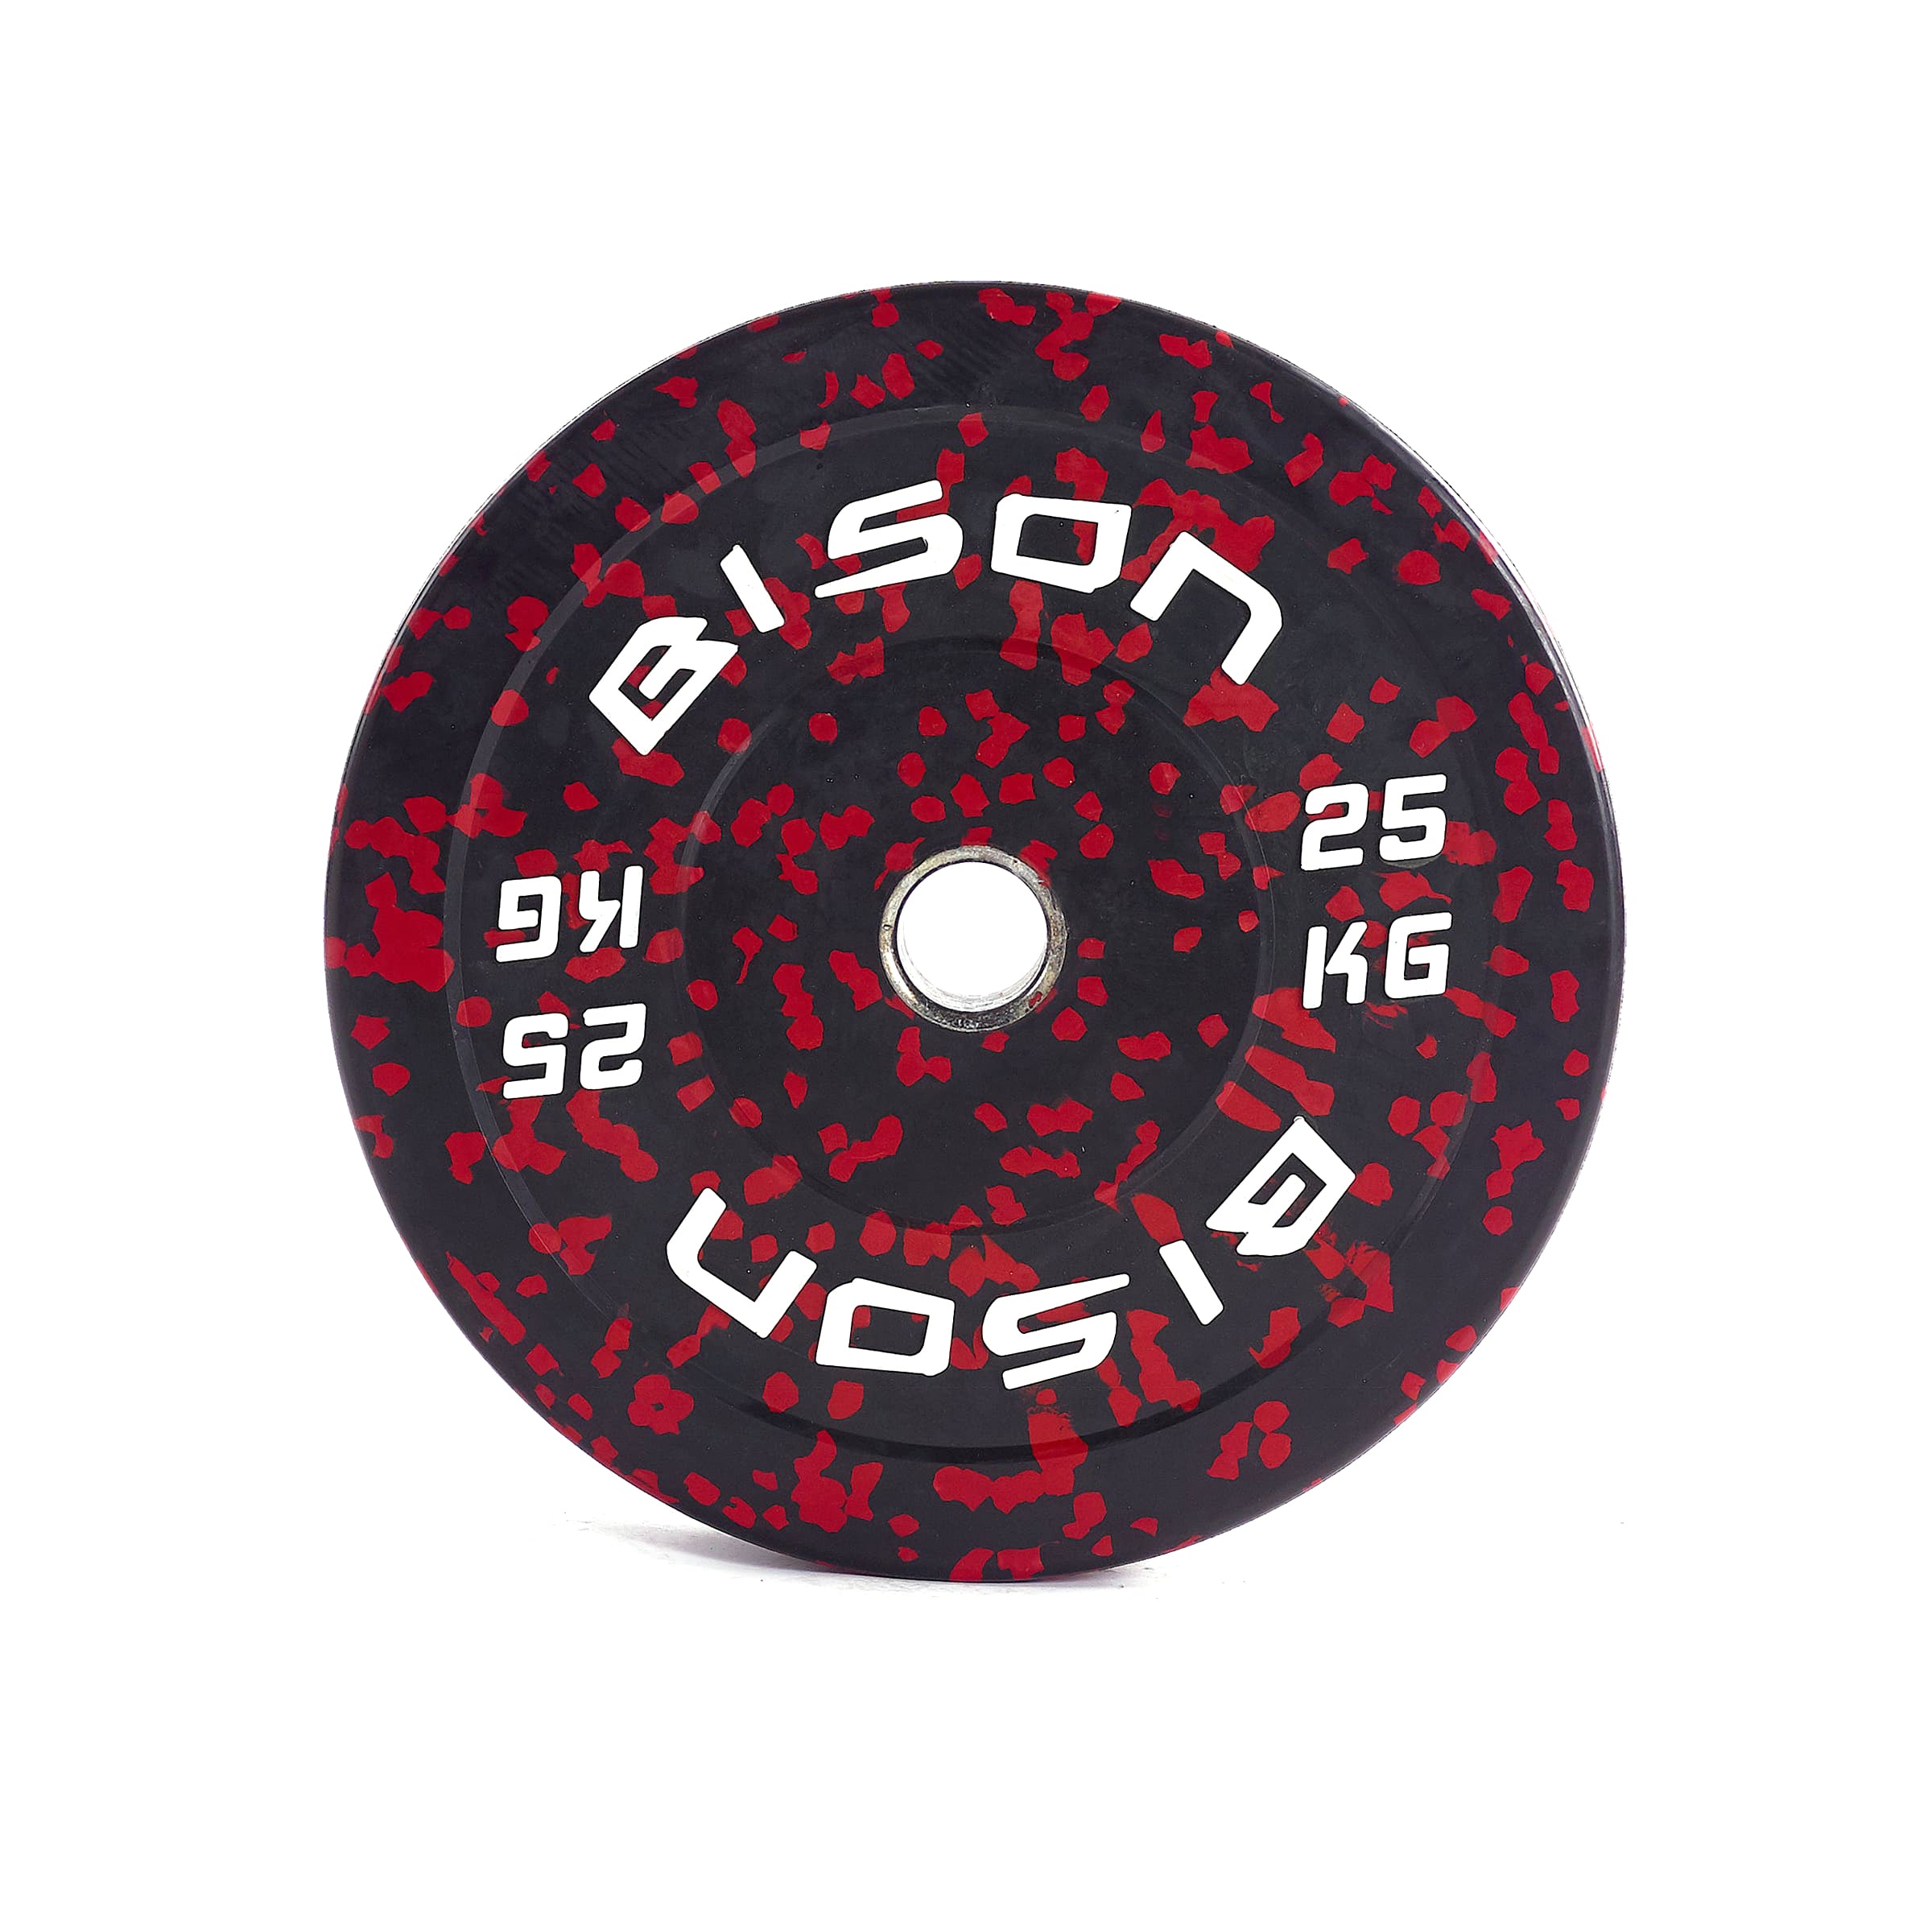 Bison Hi-Impact Bumper Plates - Wolverson Fitness